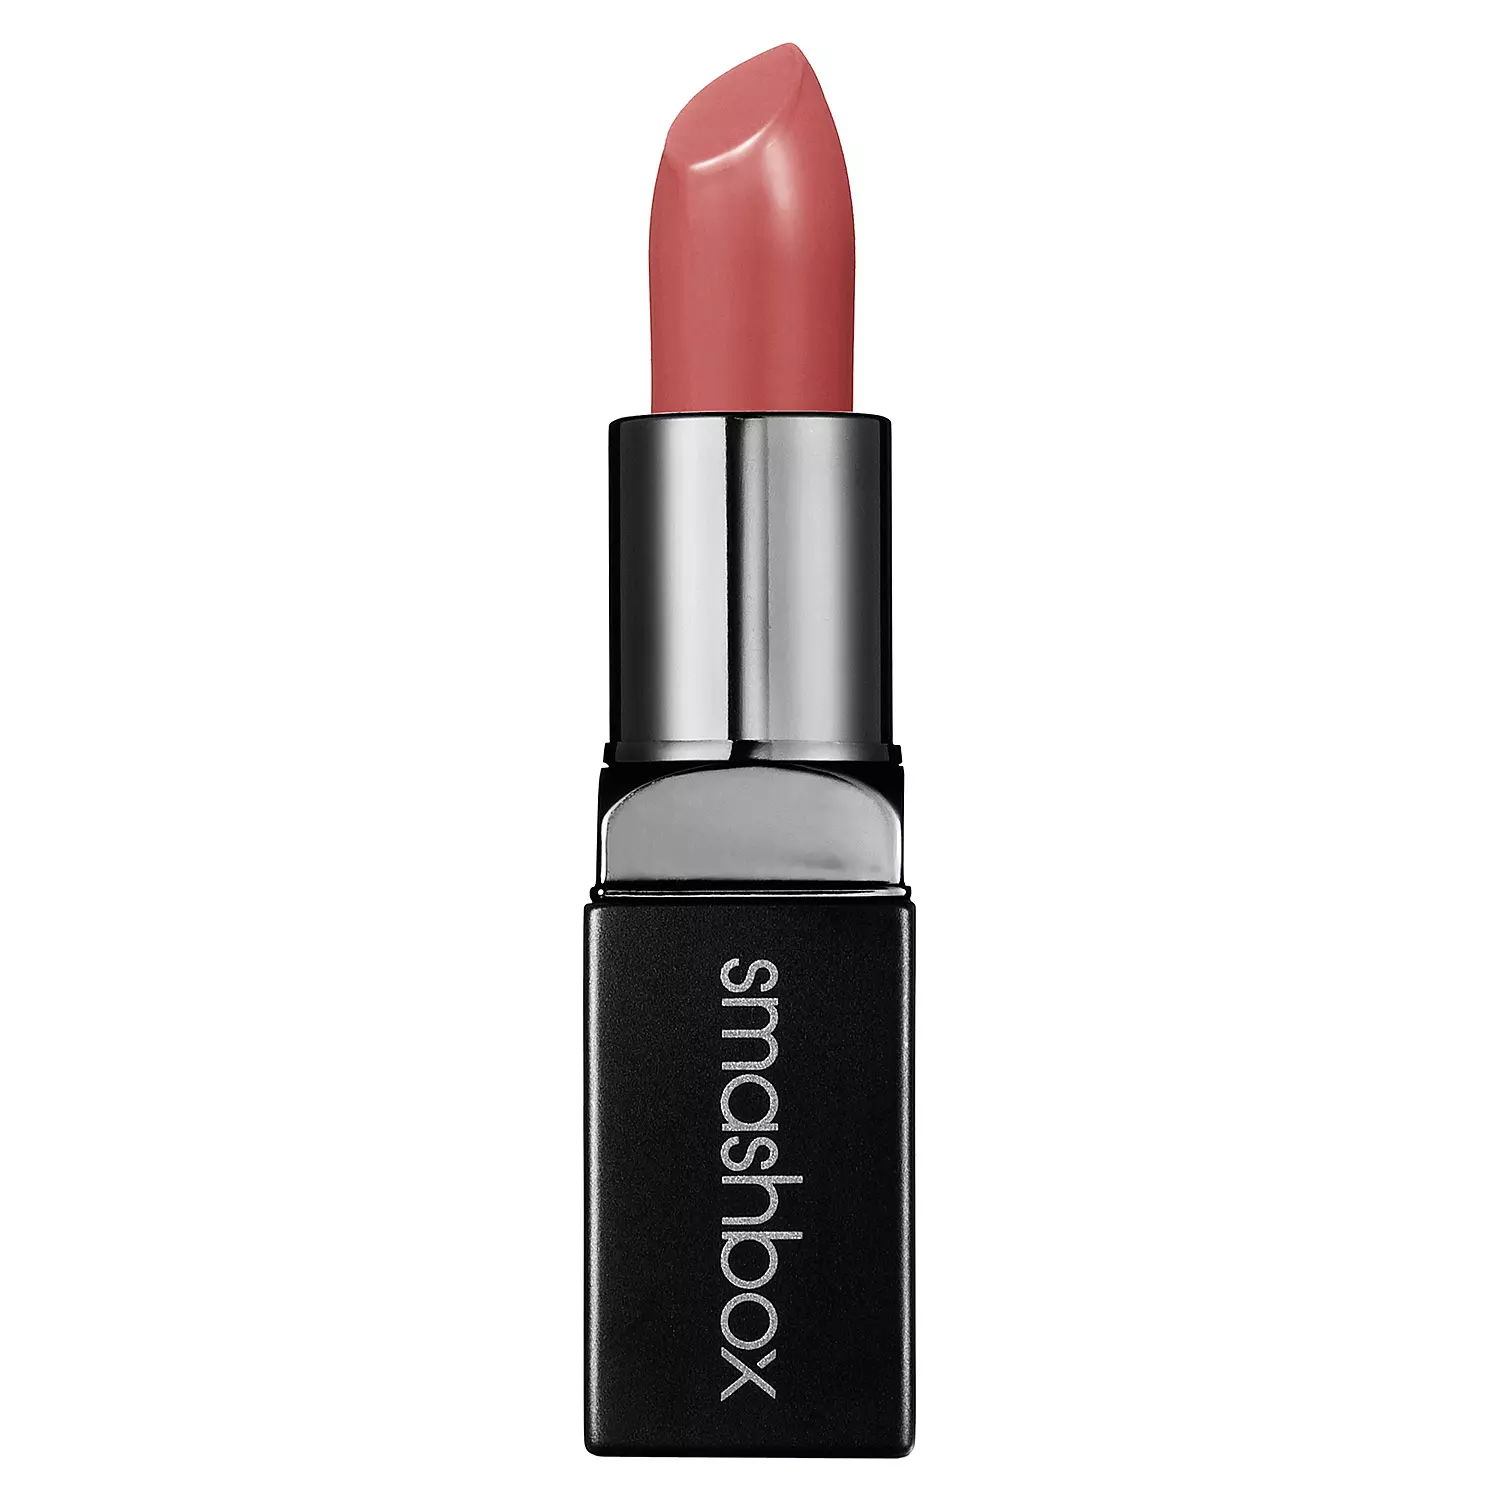 Smashbox Be Legendary Lipstick Primrose Best Deals On Smashbox Cosmetics